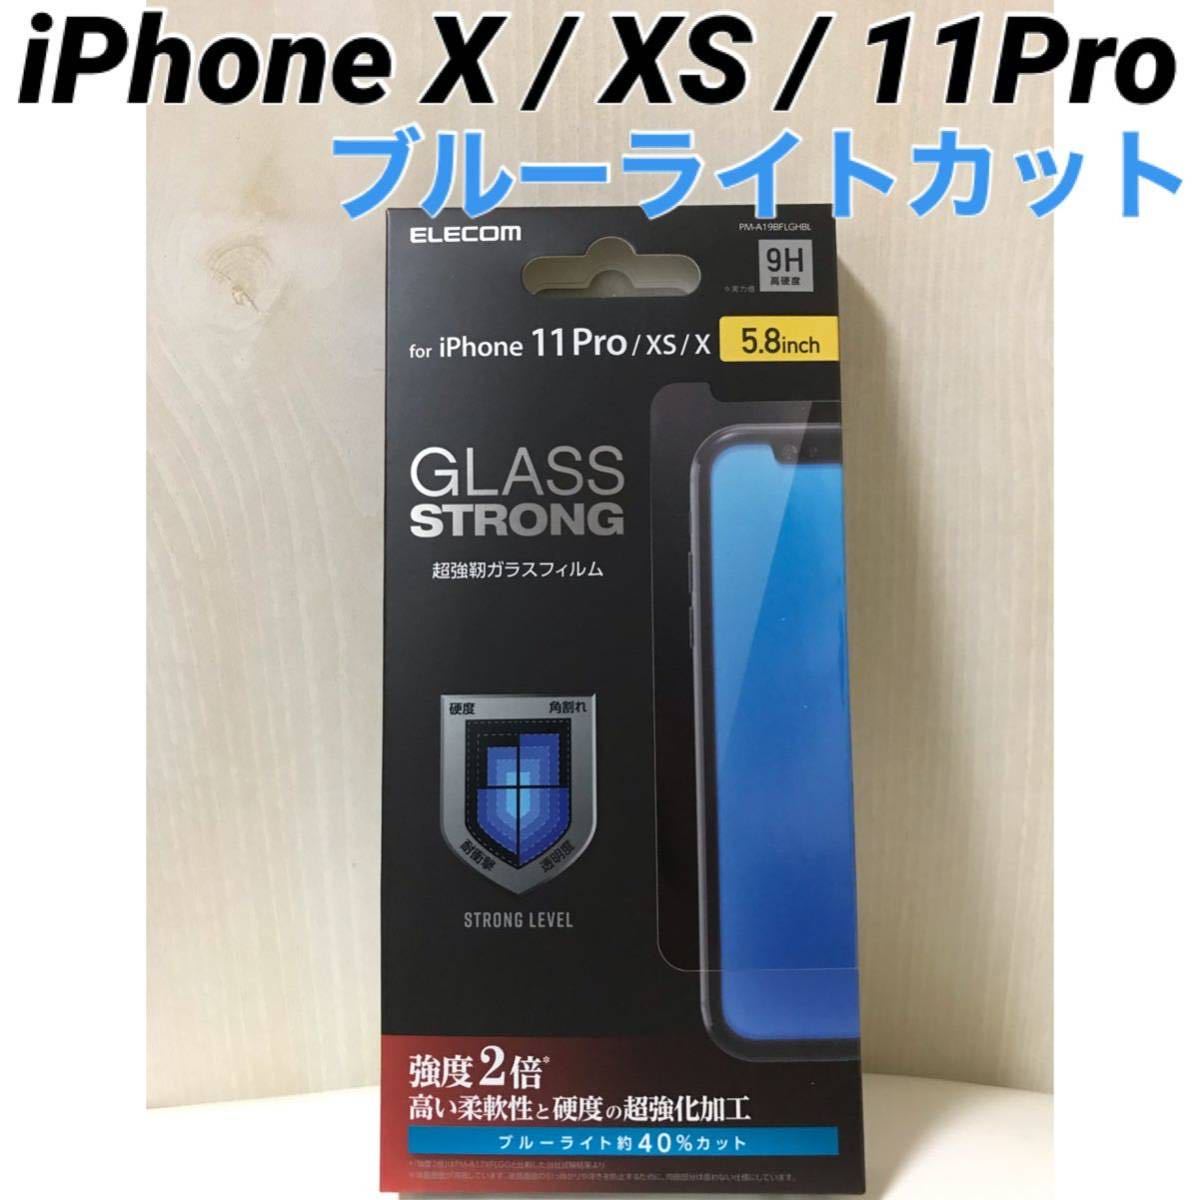 iPhoneX iPhoneXS iPhone11Pro 対応 超強靭ガラスフィルム ブルーライトカット エレコム 液晶保護 iPhone X iPhone XS iPhone 11Pro_画像1